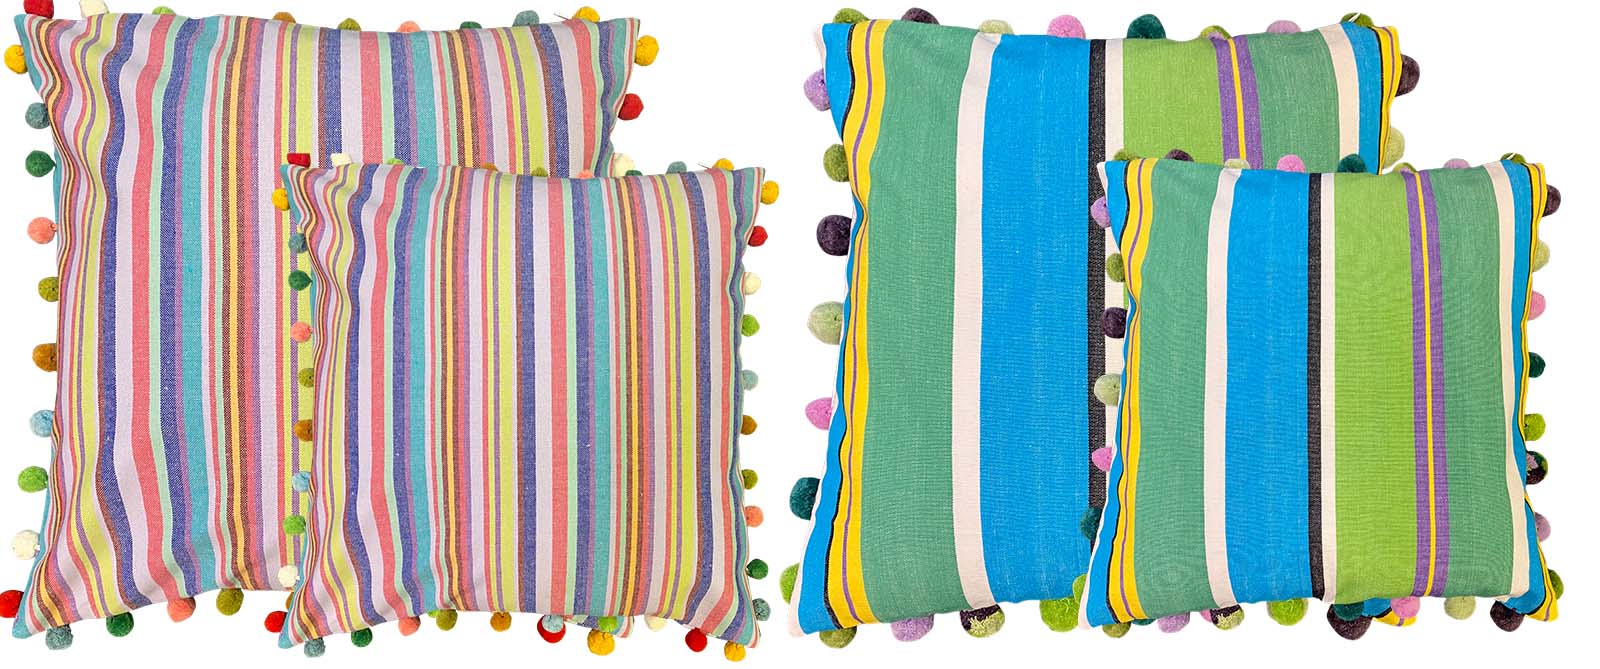 Striped Pompom Cushions